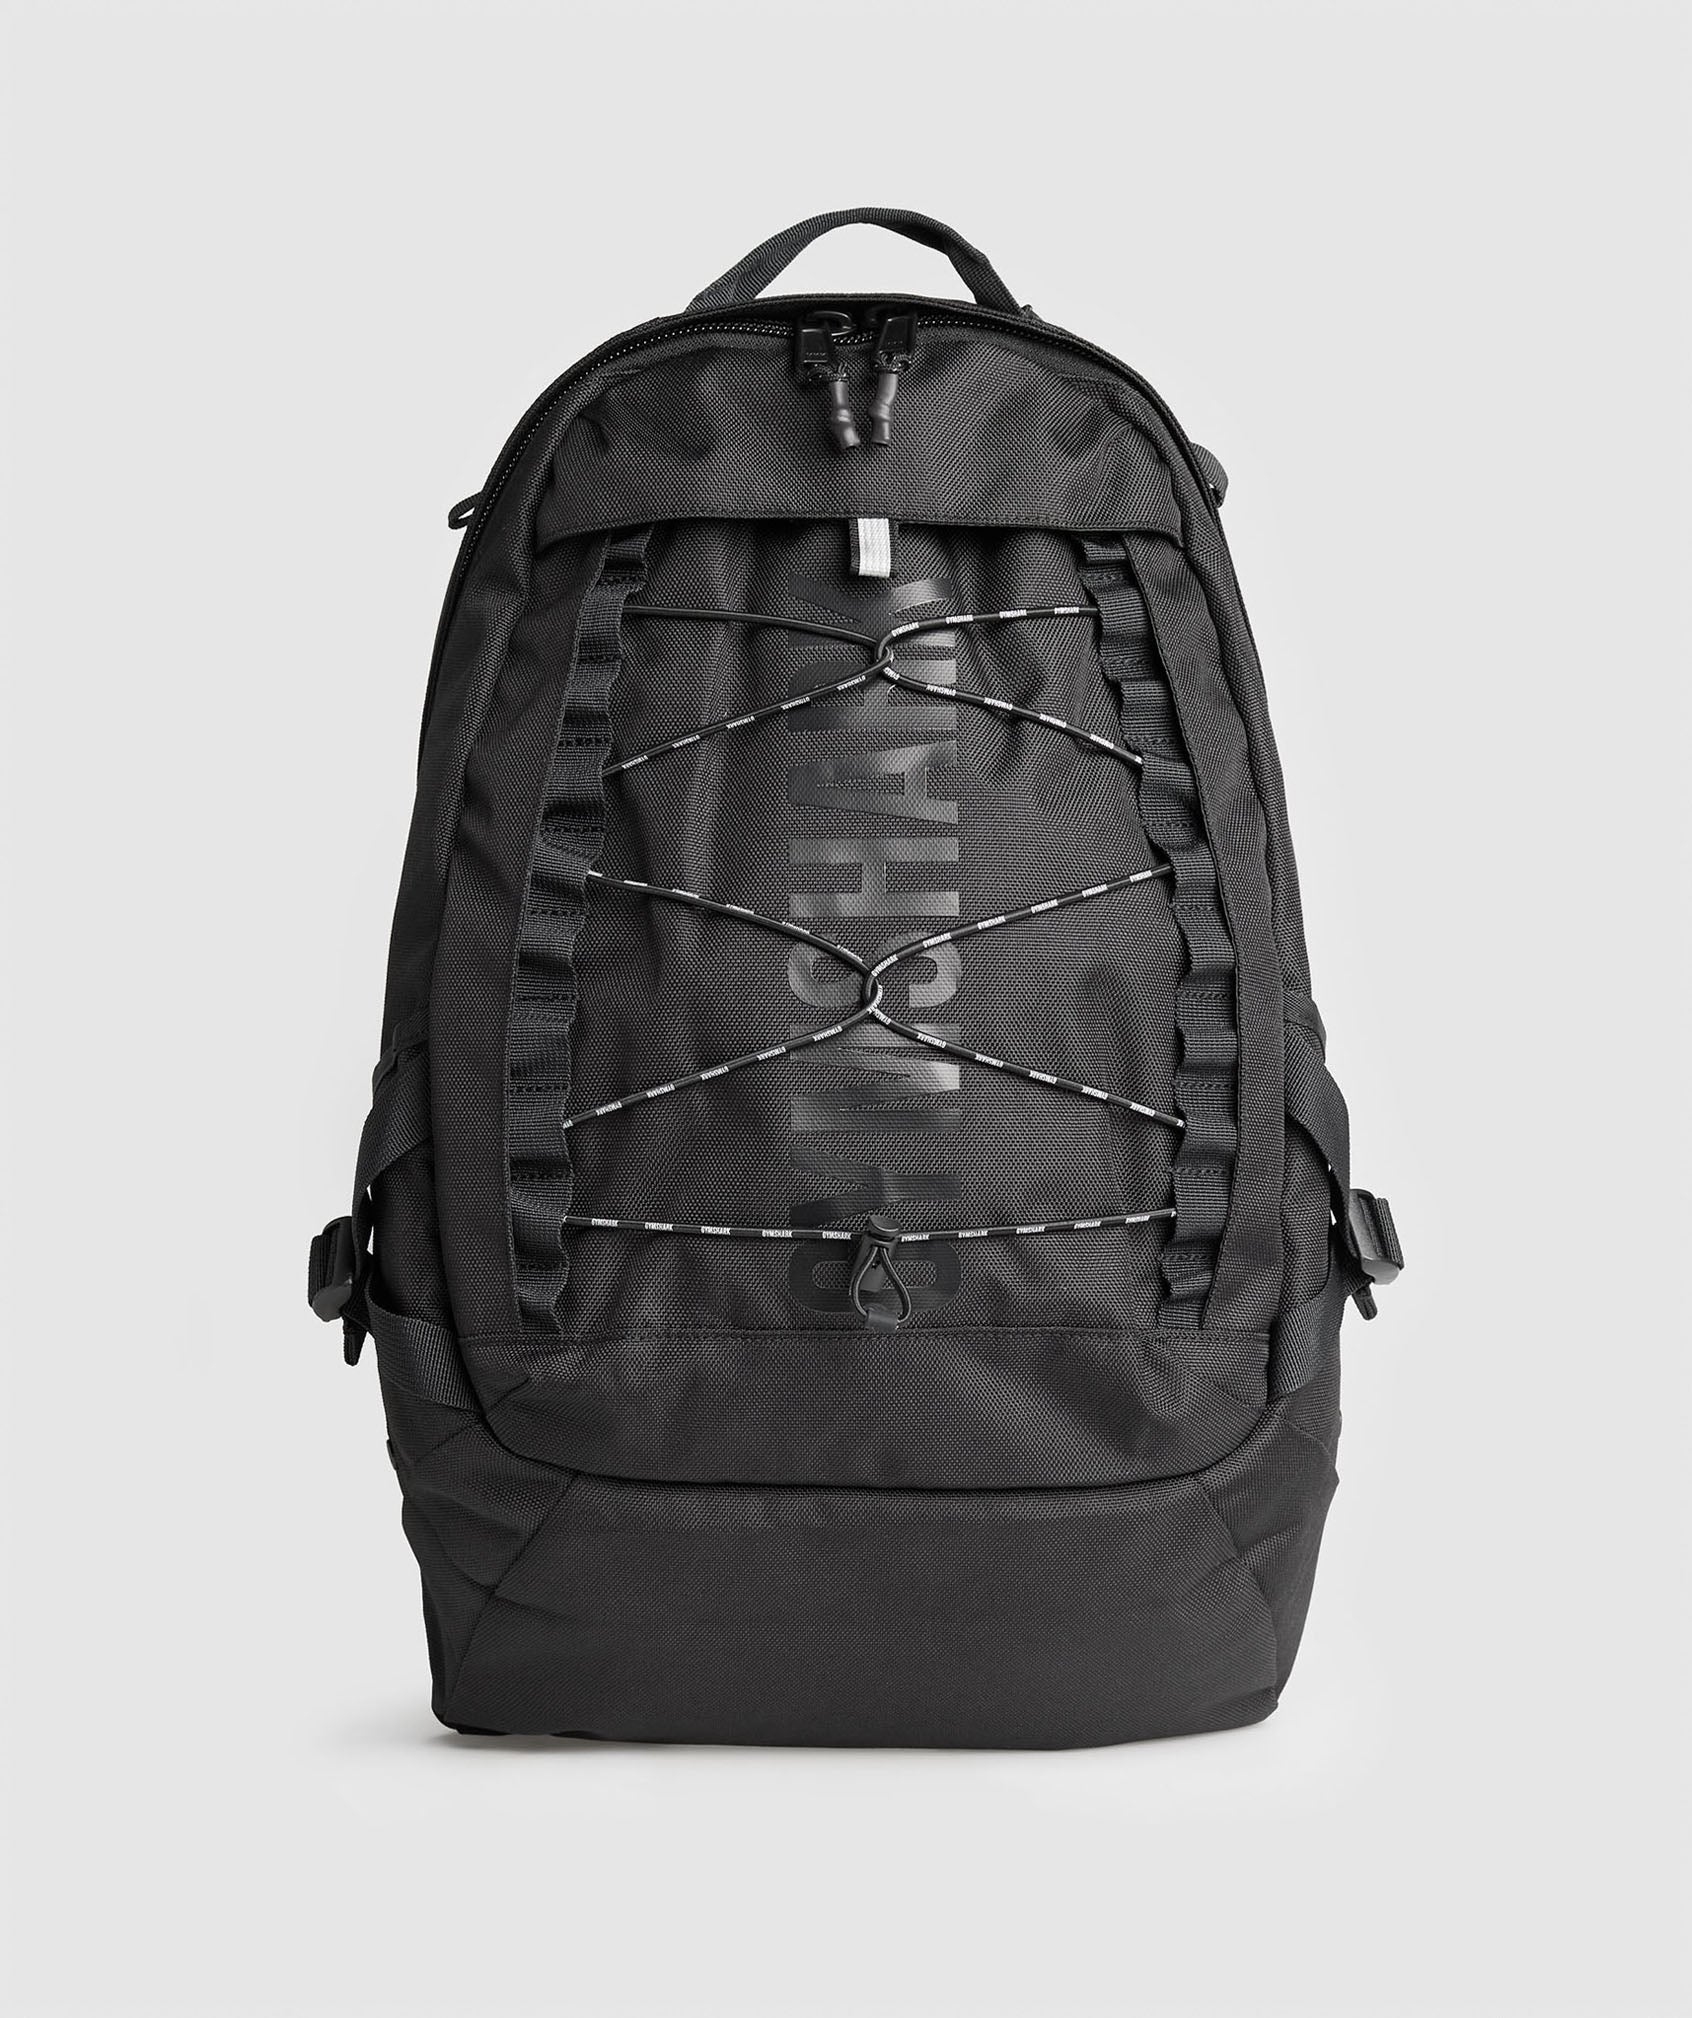 Pursuit Backpack in Black